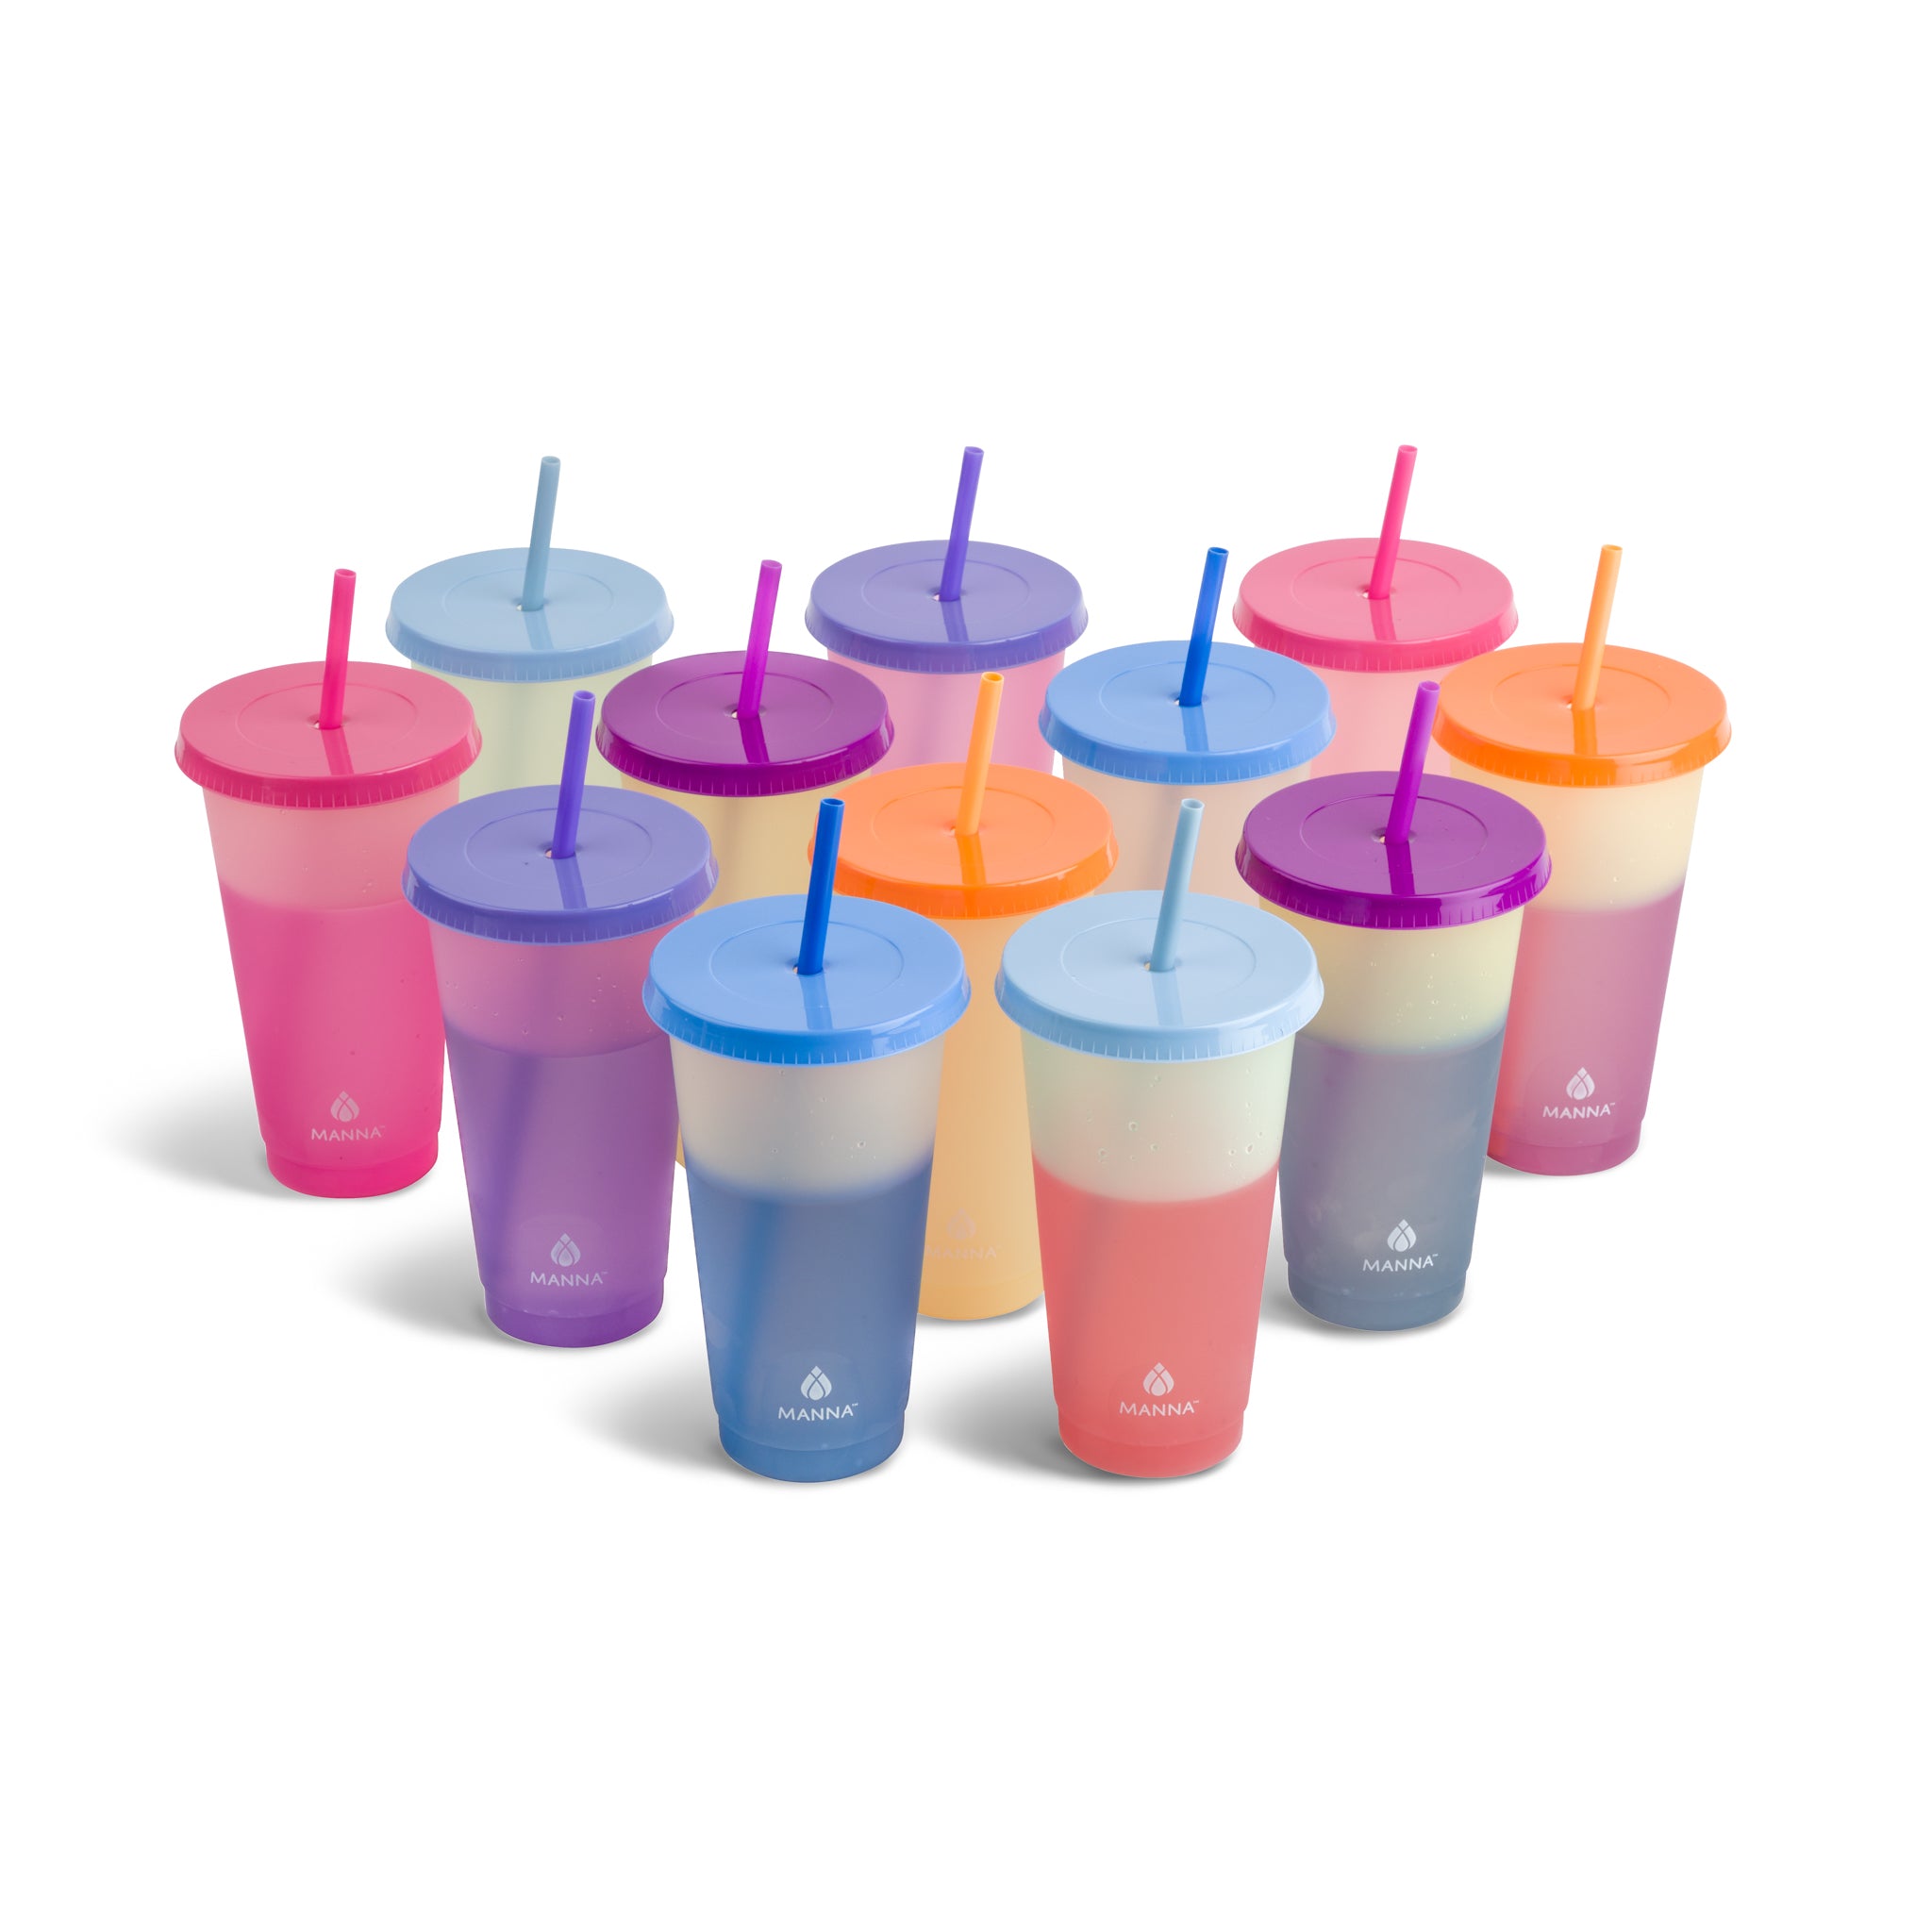 TAL Color Changing Plastic Tumbler Cups 24 fl oz, Multi Color 